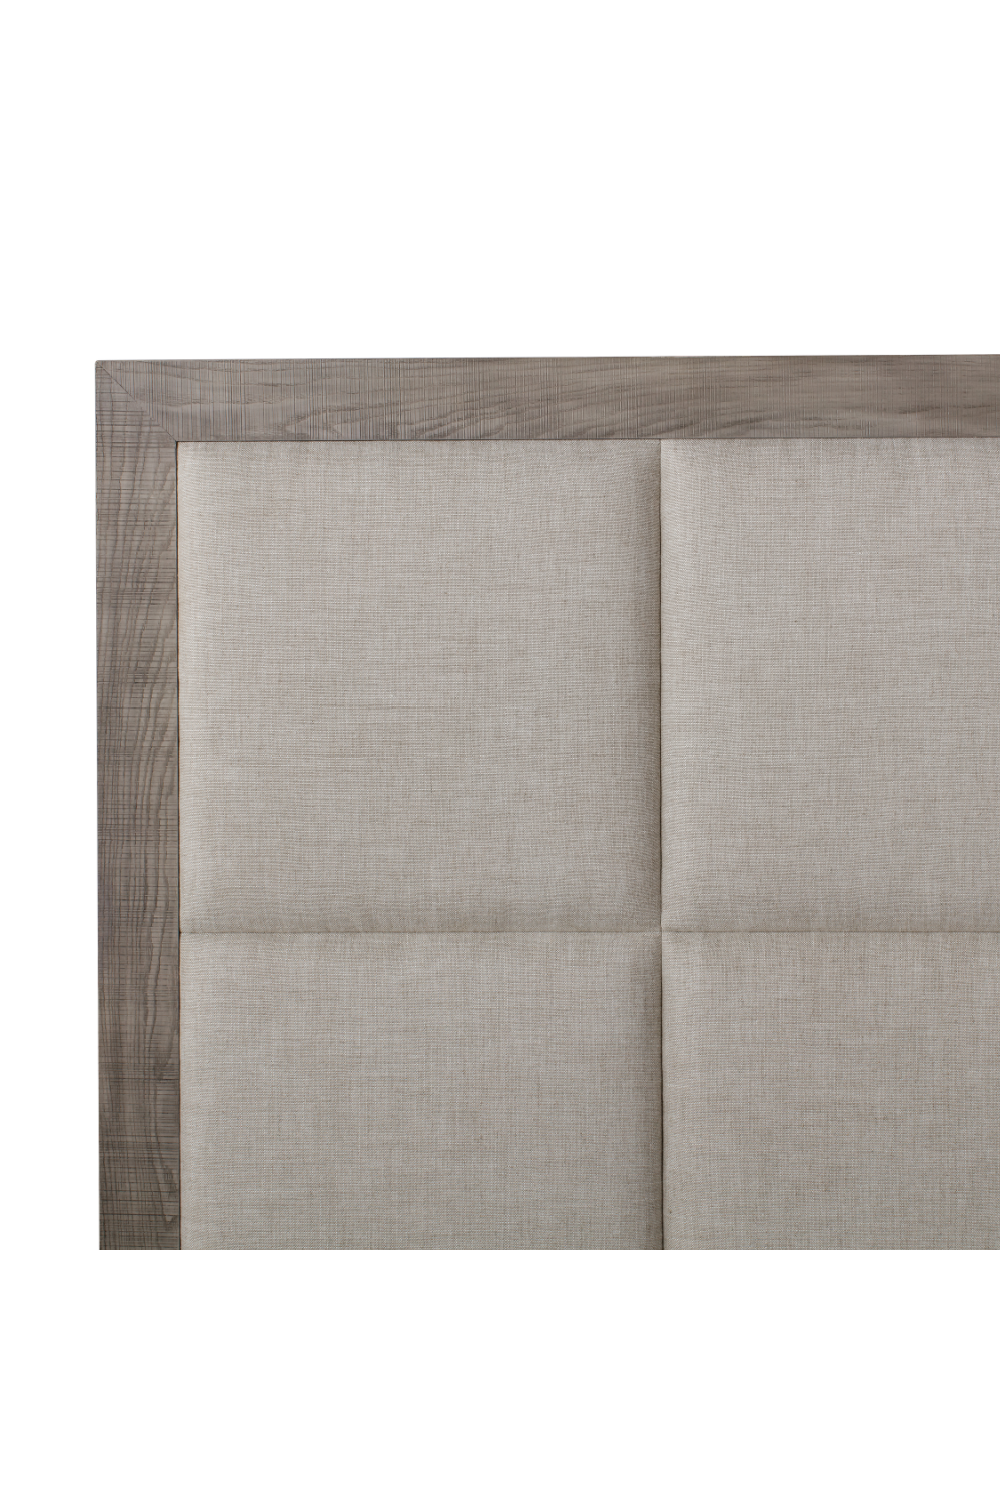 Gray Textured Linen King Bed | Andrew Martin Raffles | OROA